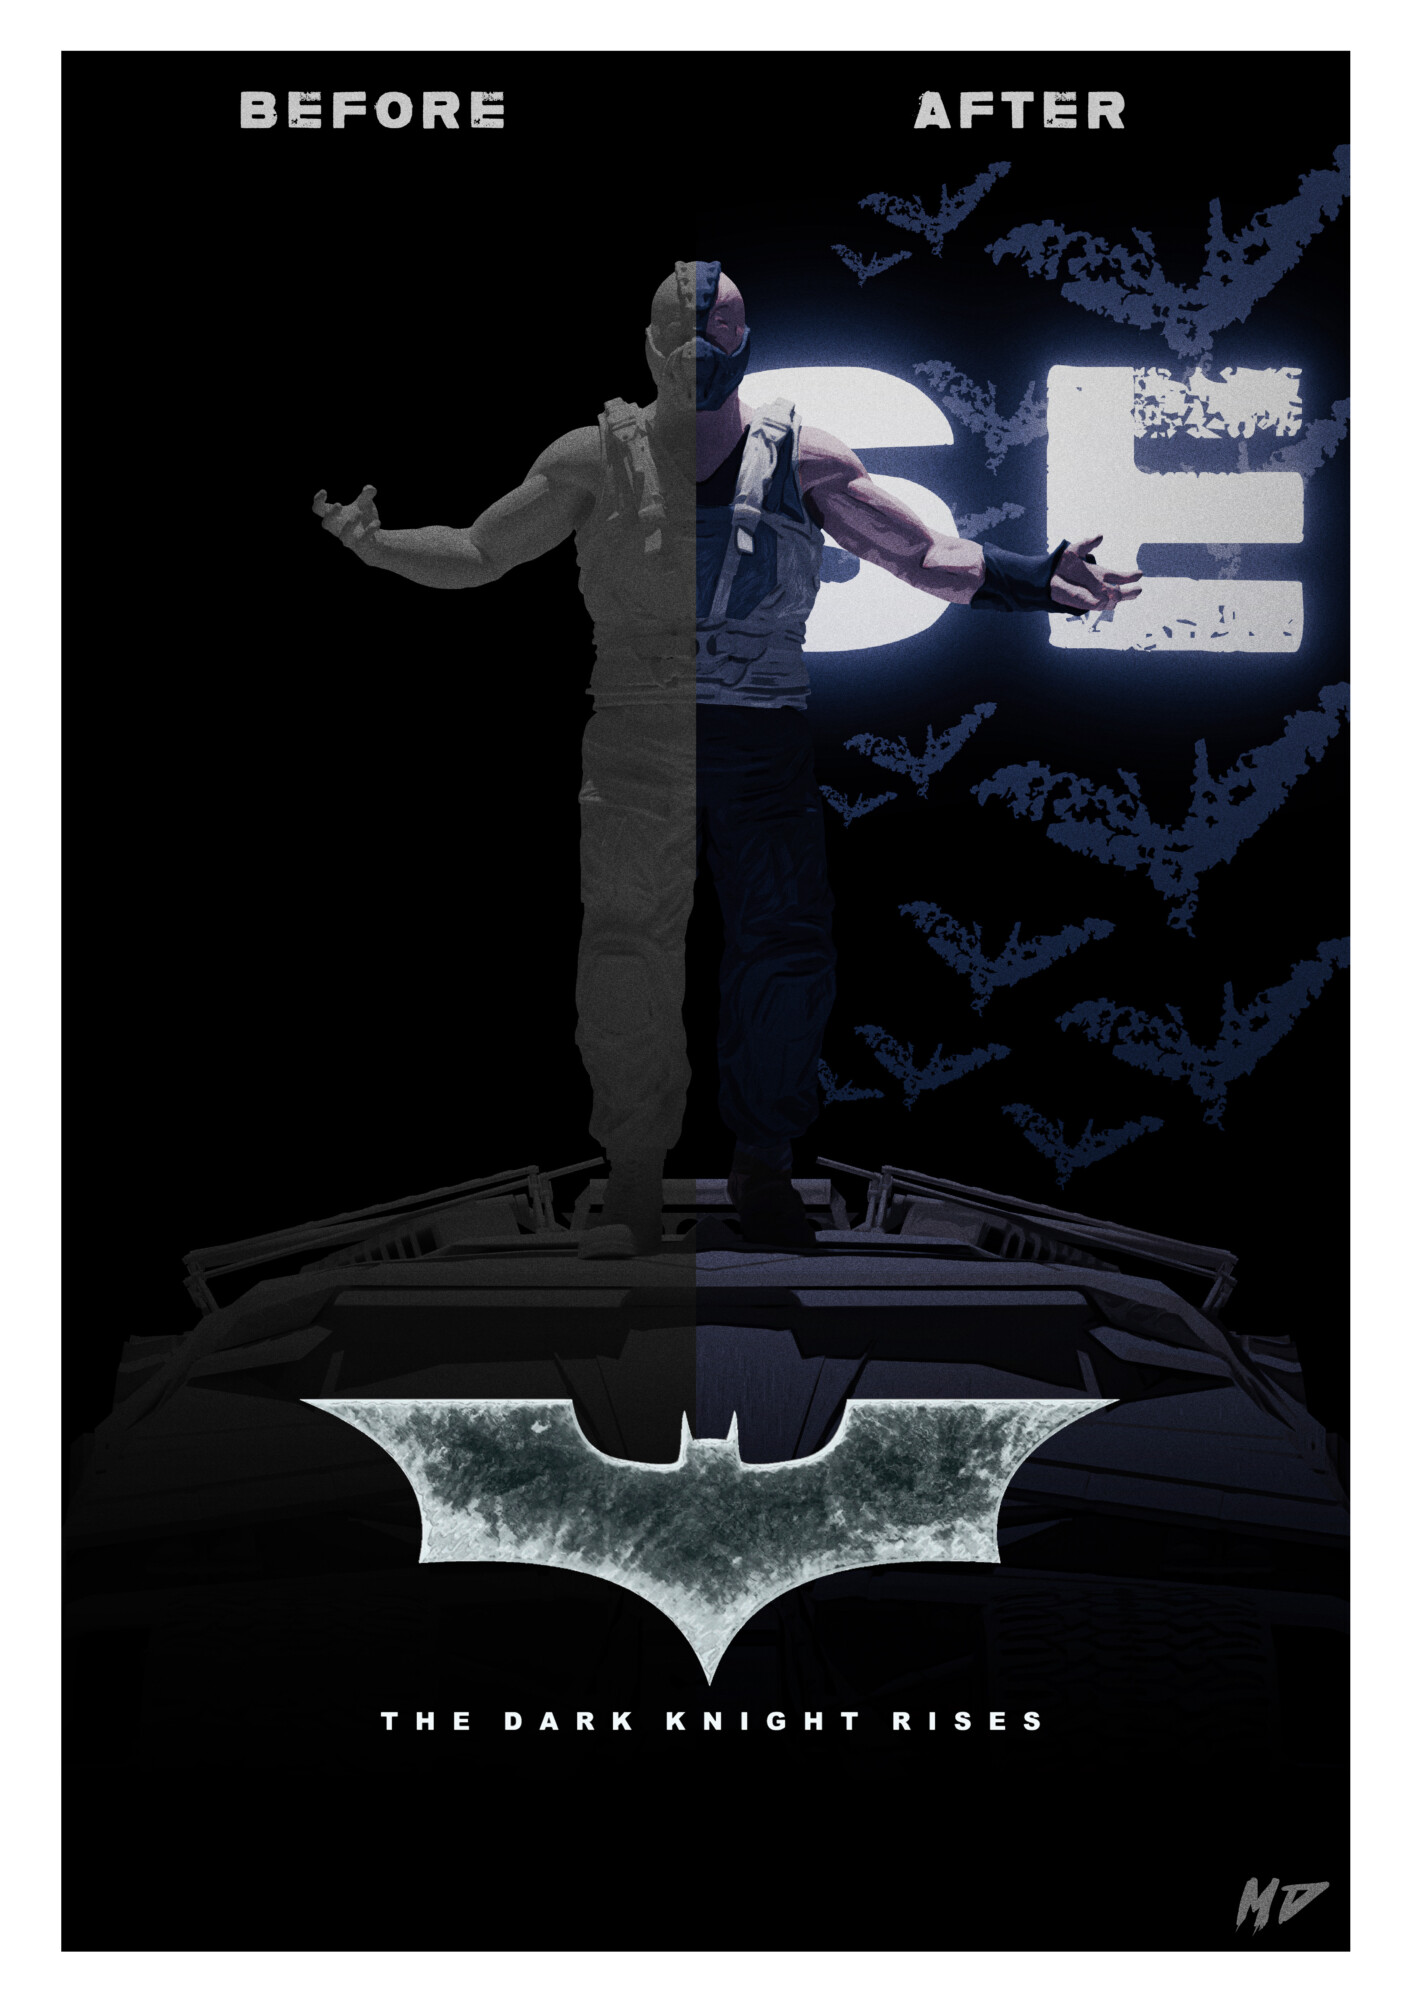 The dark knight rises tribute poster